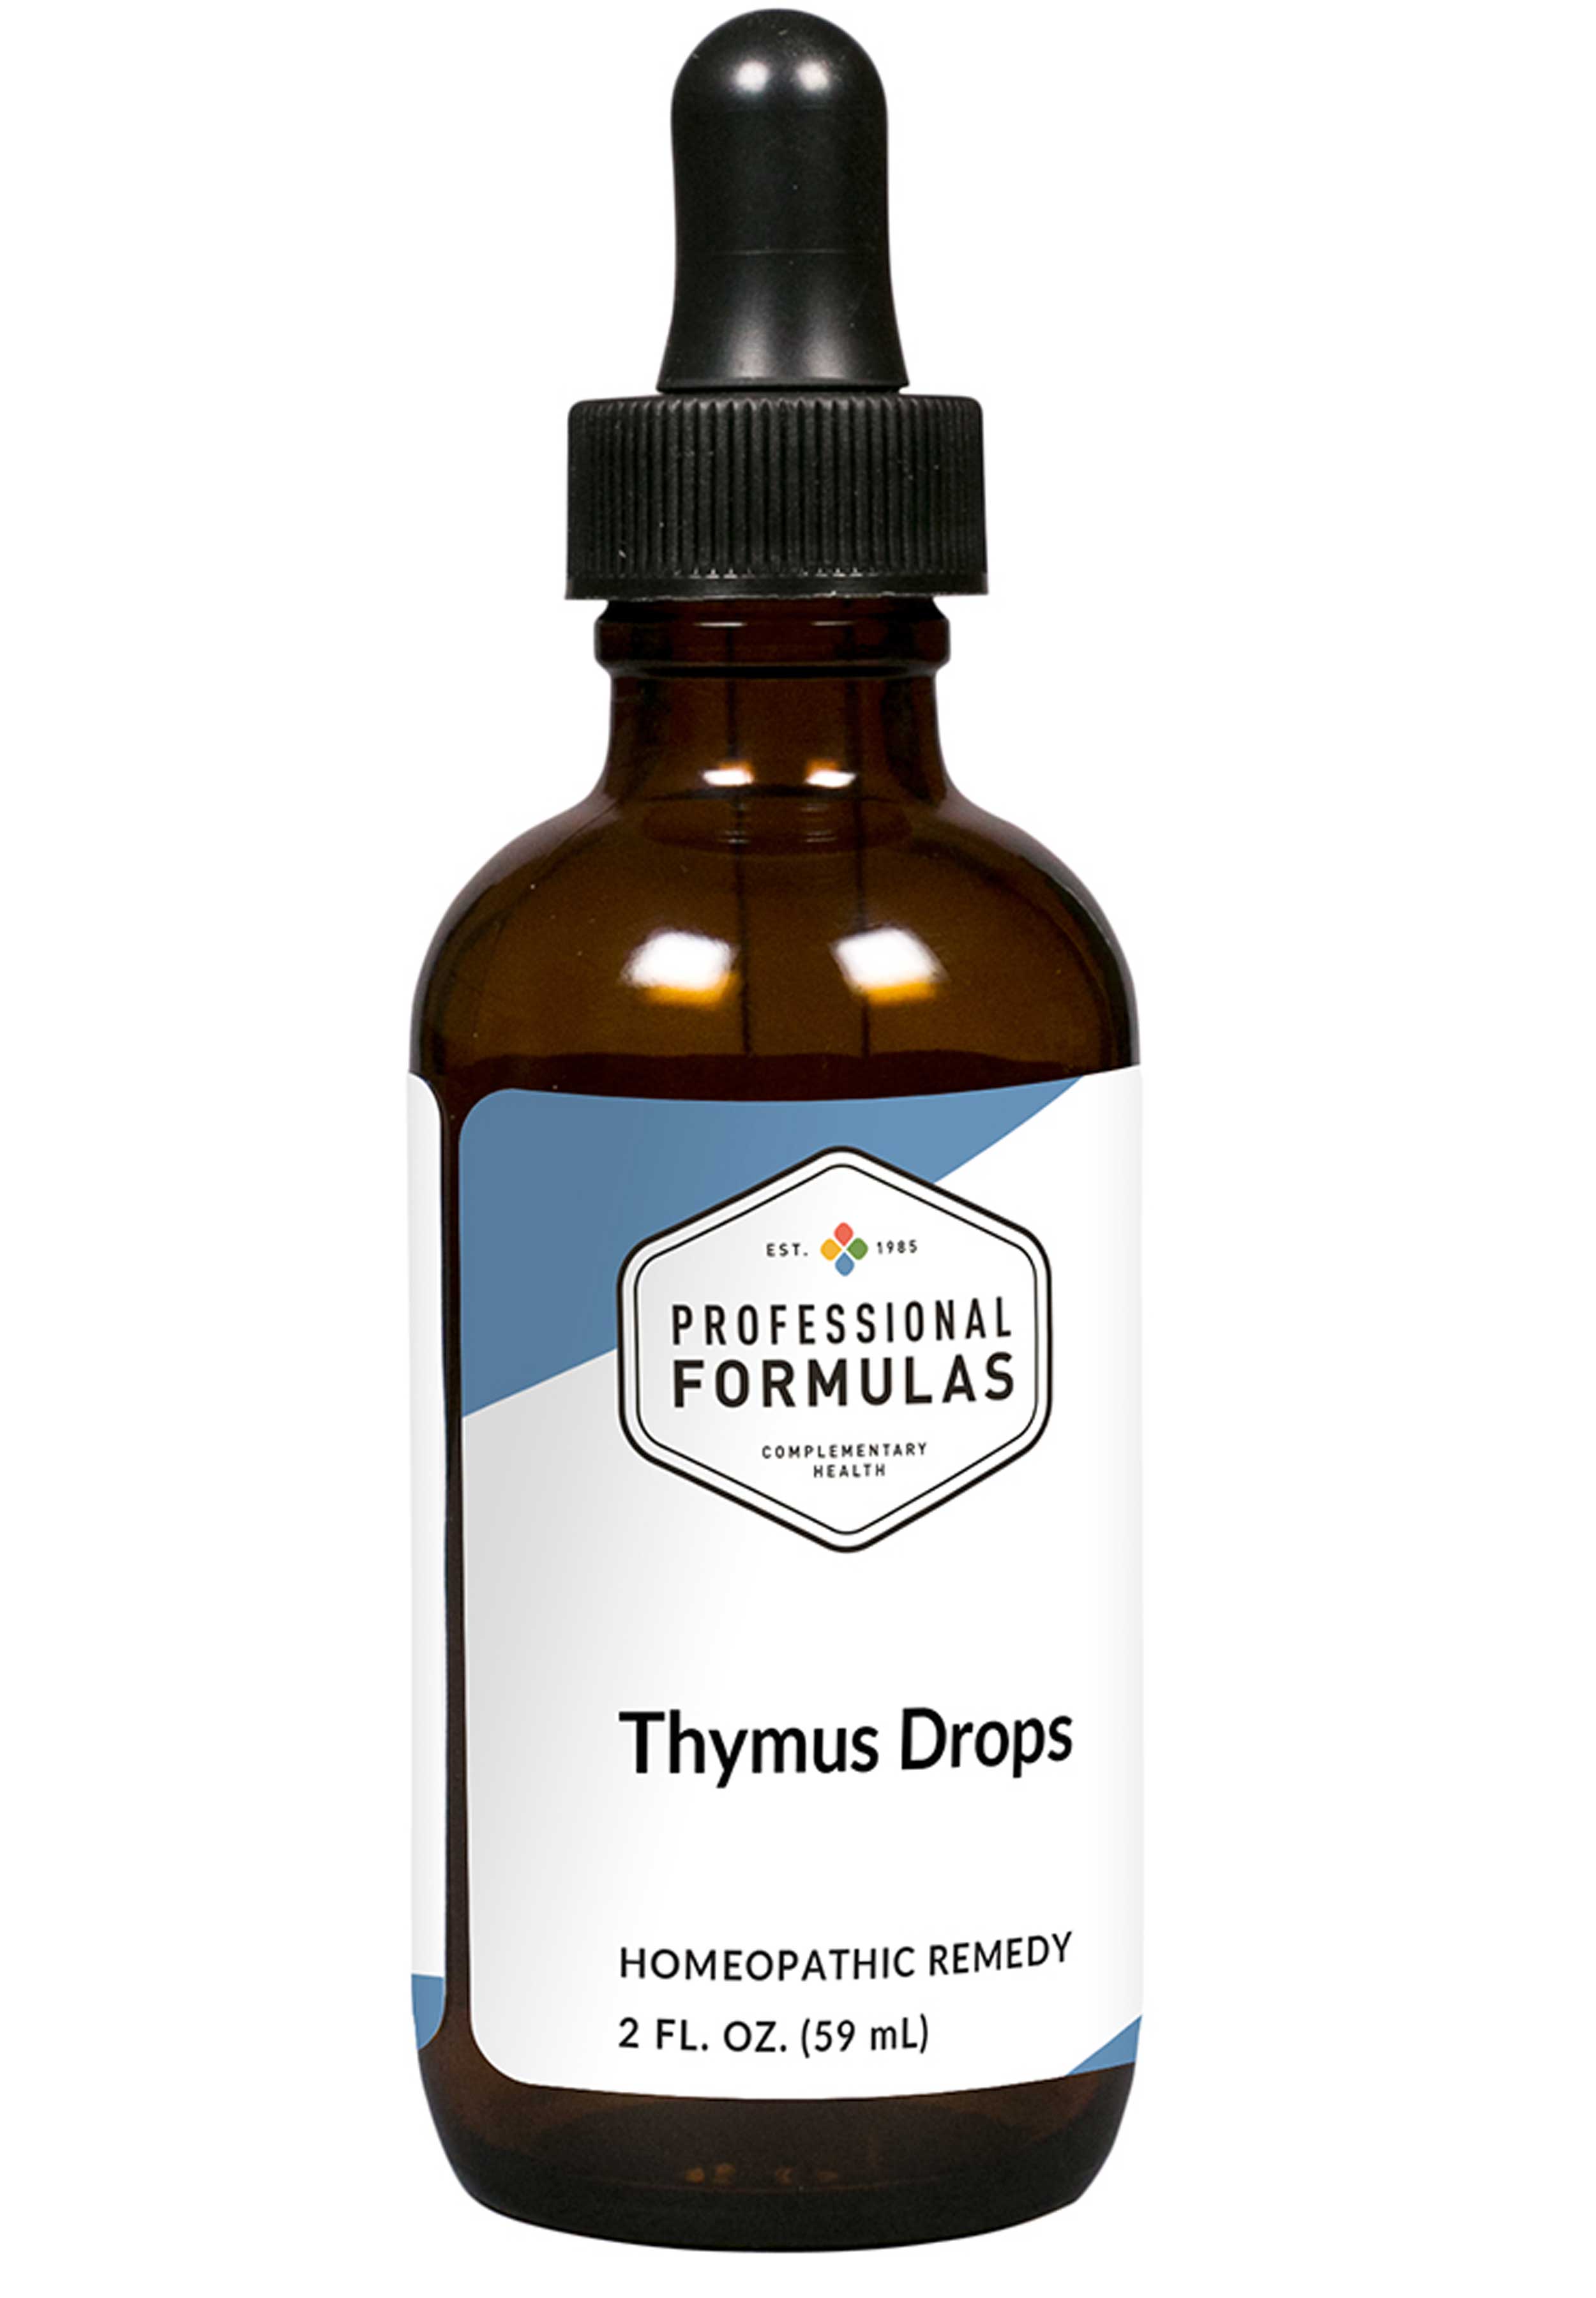 Professional Formulas Thymus Drops